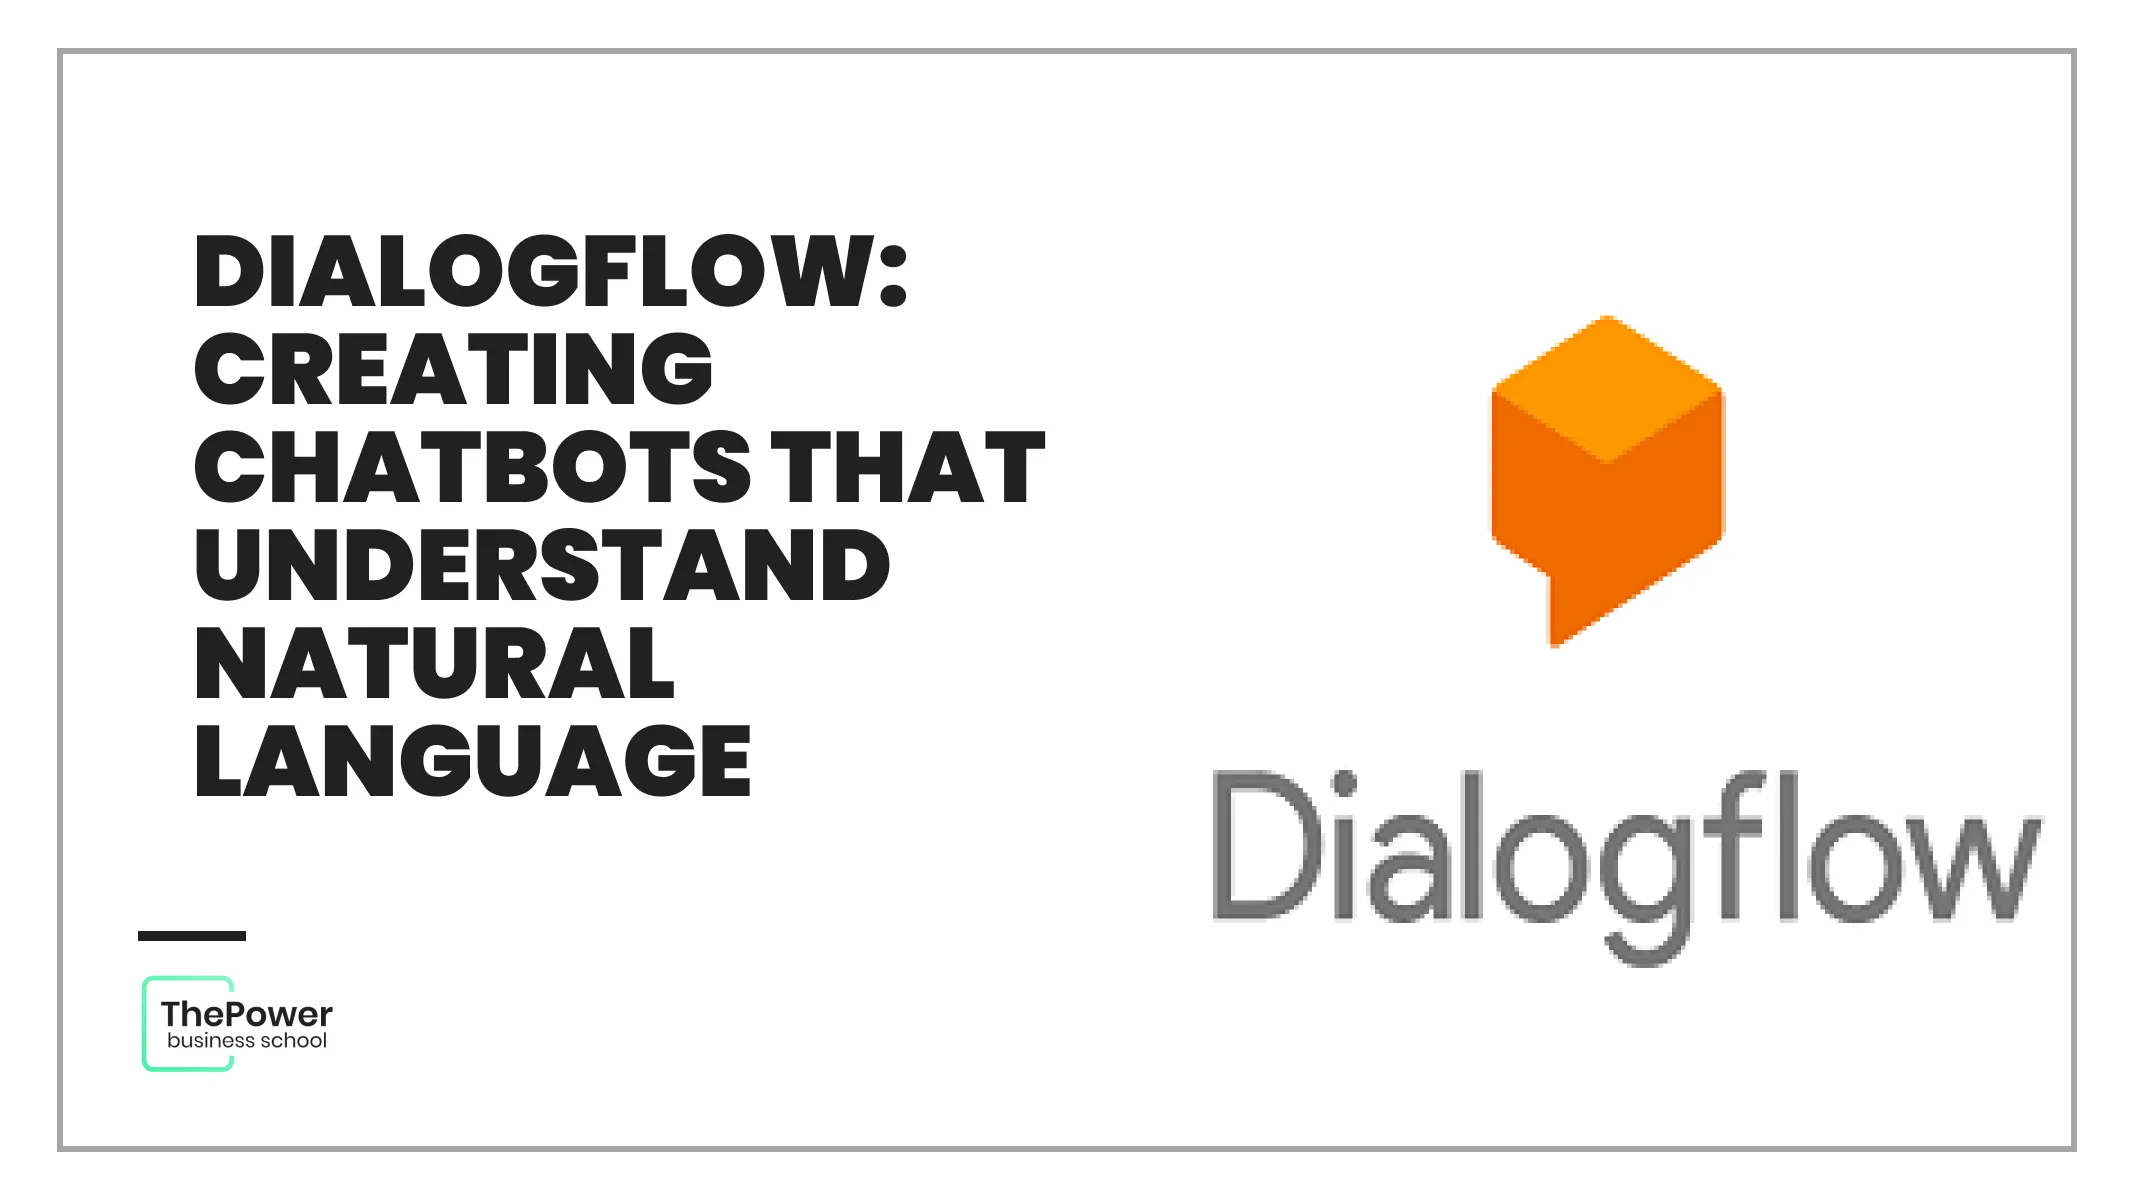 Dialogflow: Creating chatbots that understand natural language